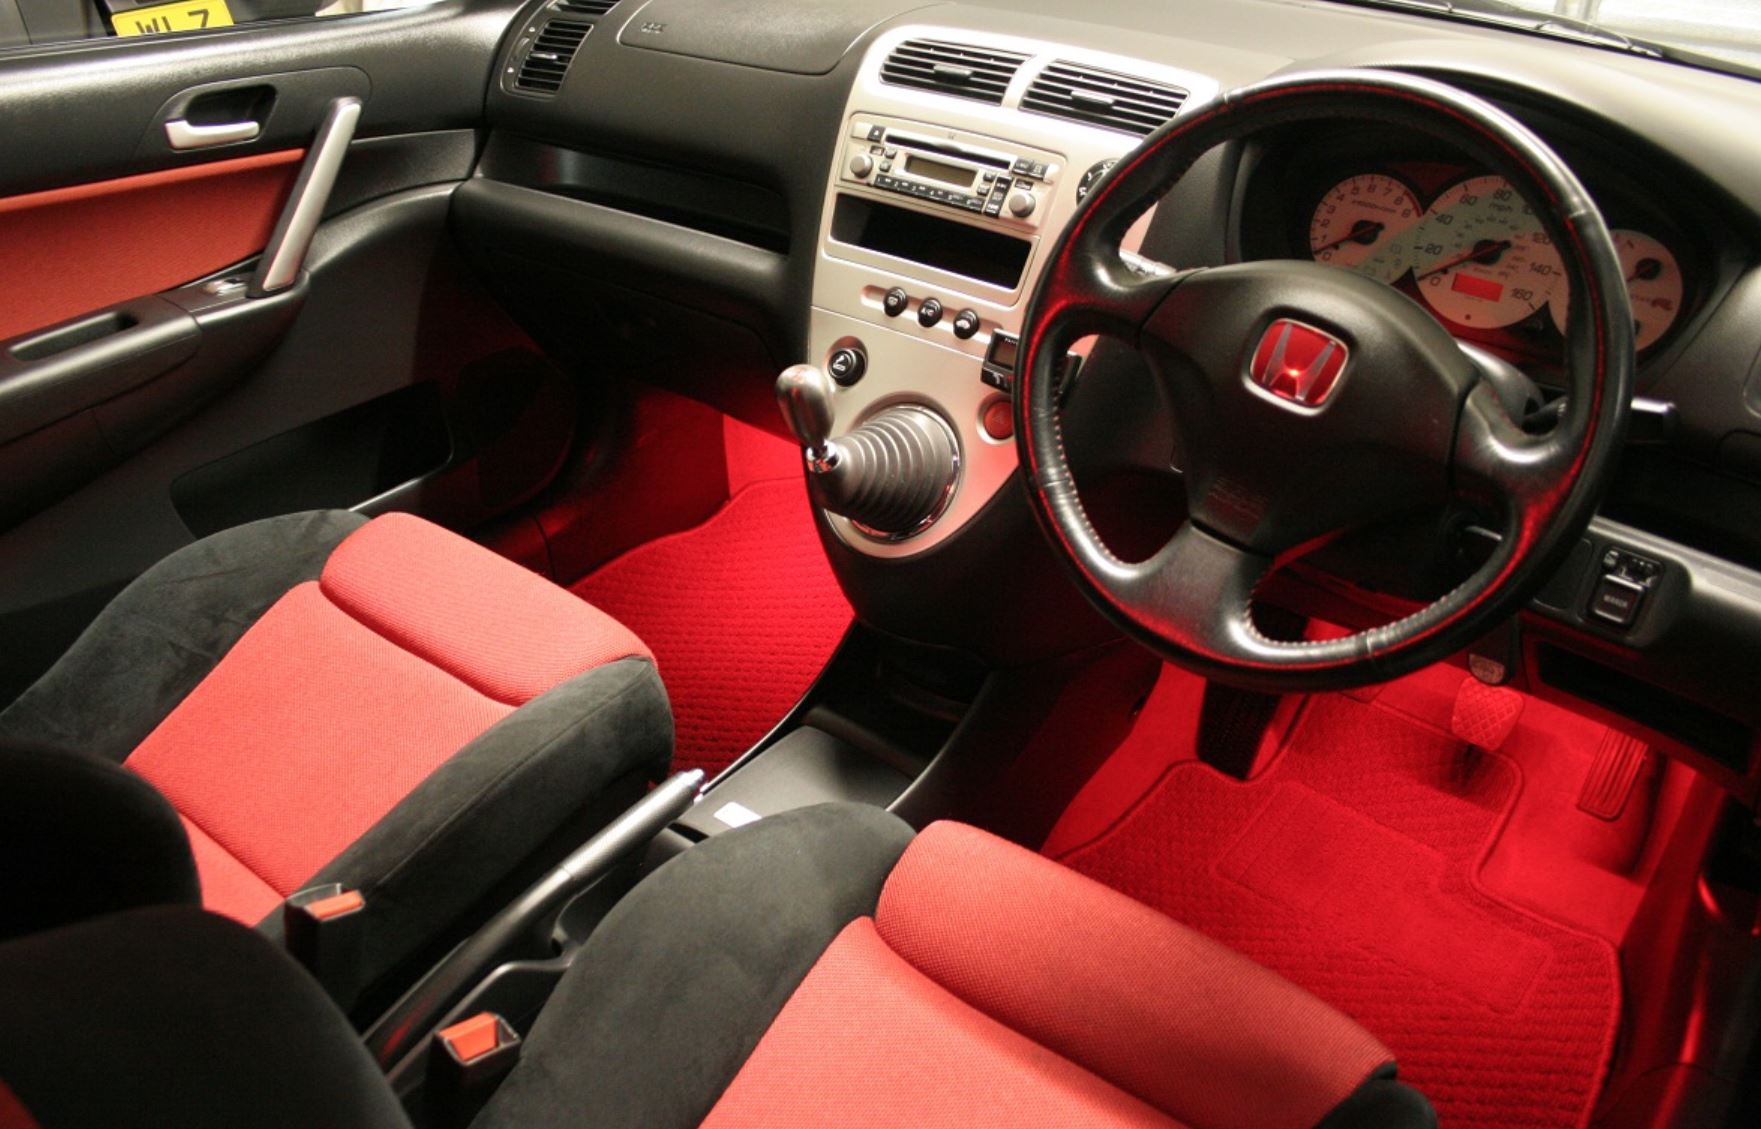 Honda Civic Type R Ep3 Buying Guide History Garage Dreams